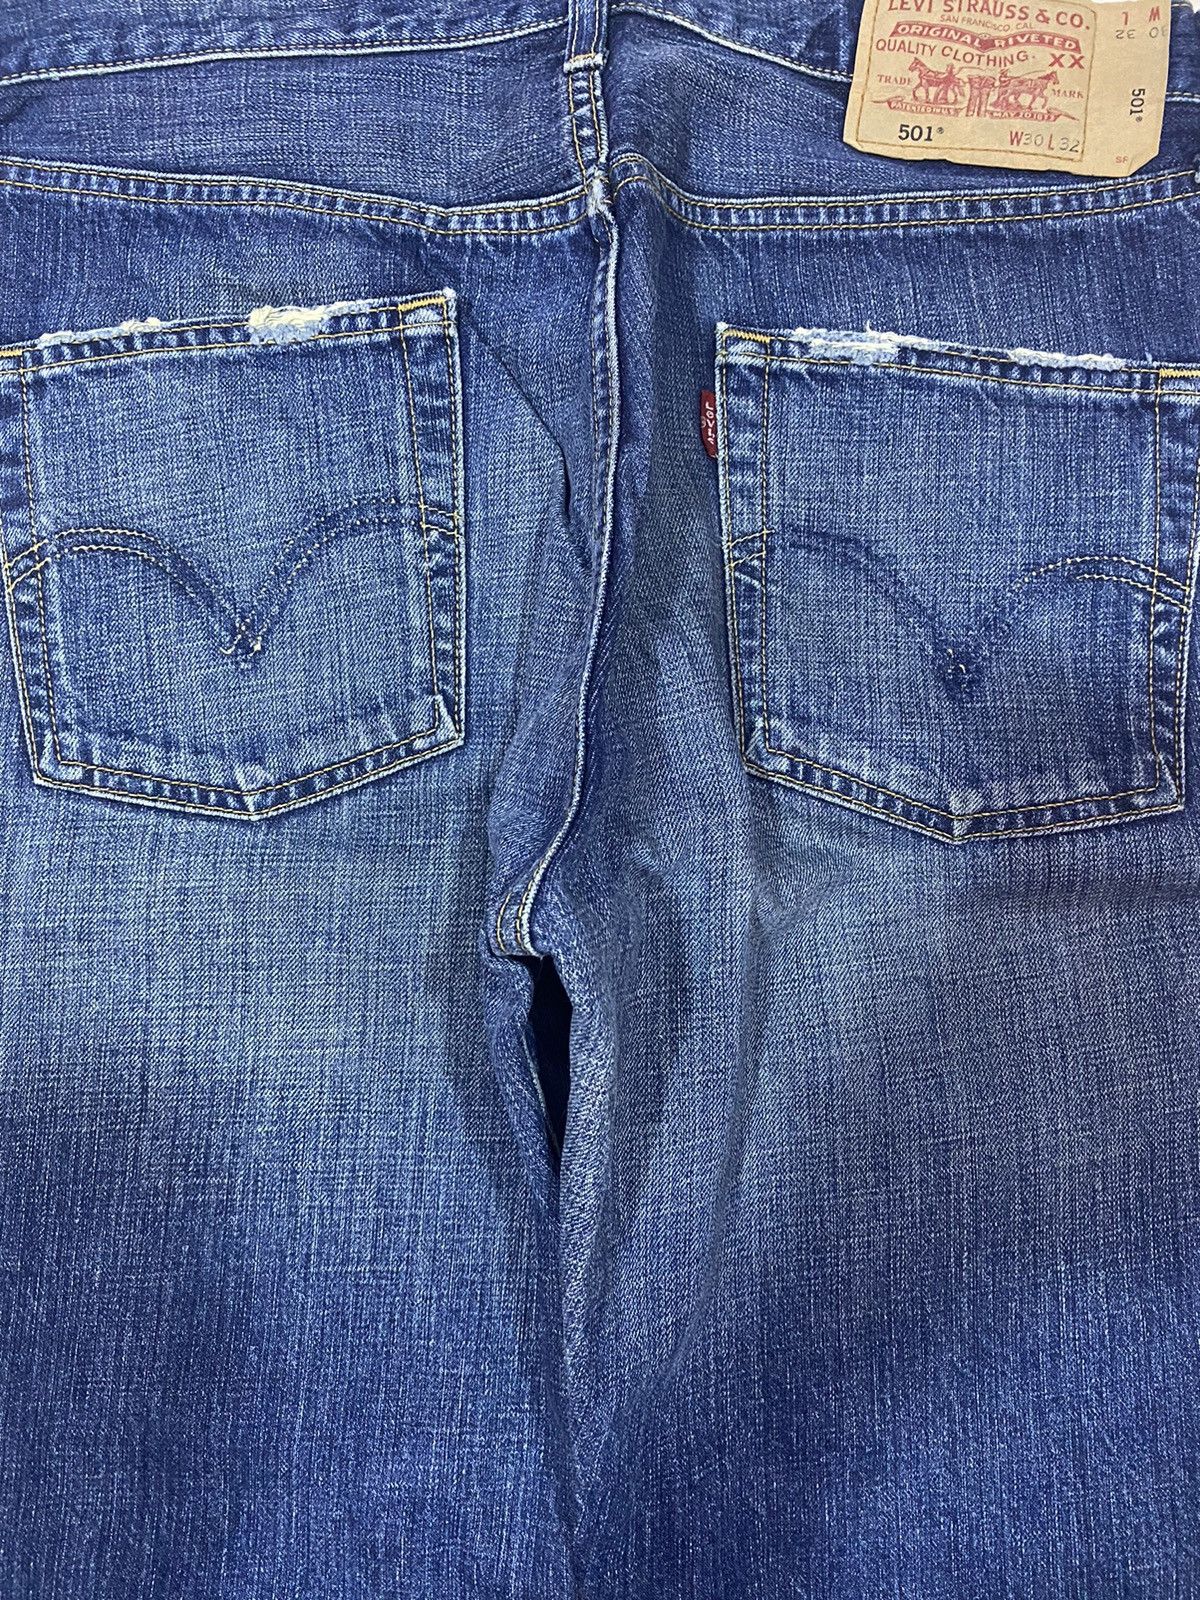 Levi’s San Francisco 501 Denim Jeans - 4